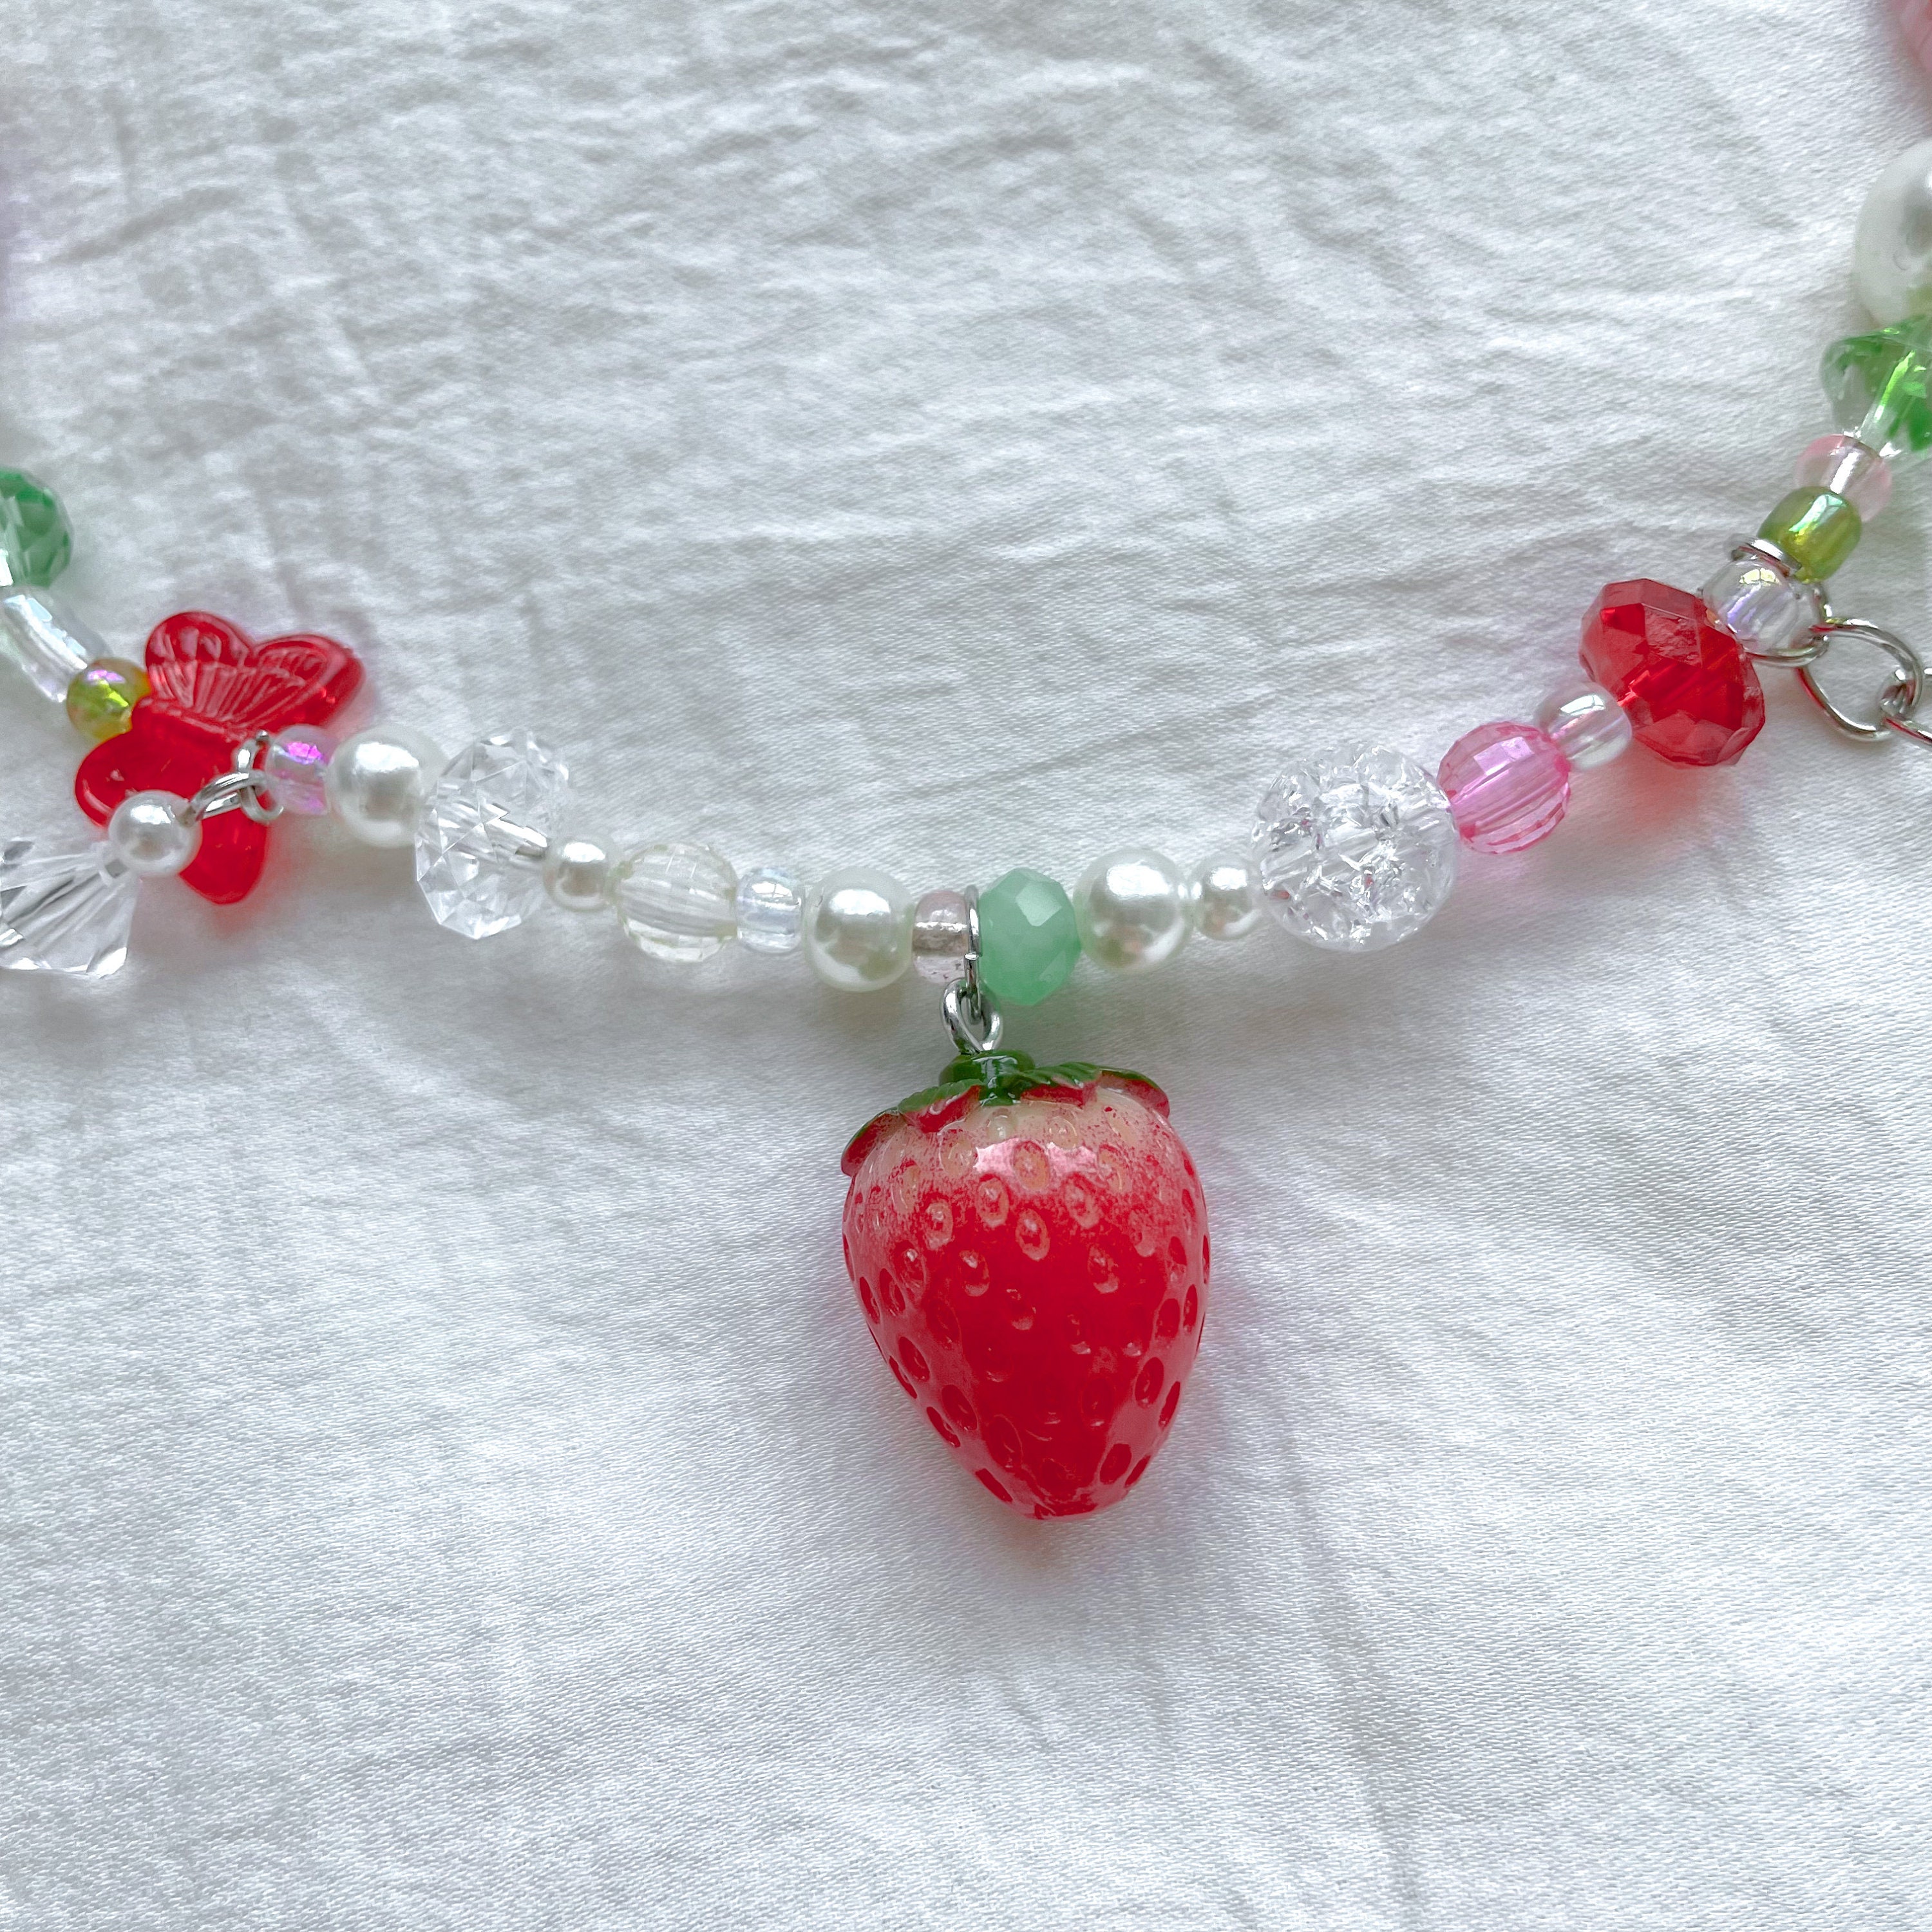 DIY Kit, Beaded Strawberry Necklace Jewelry Supply Kit